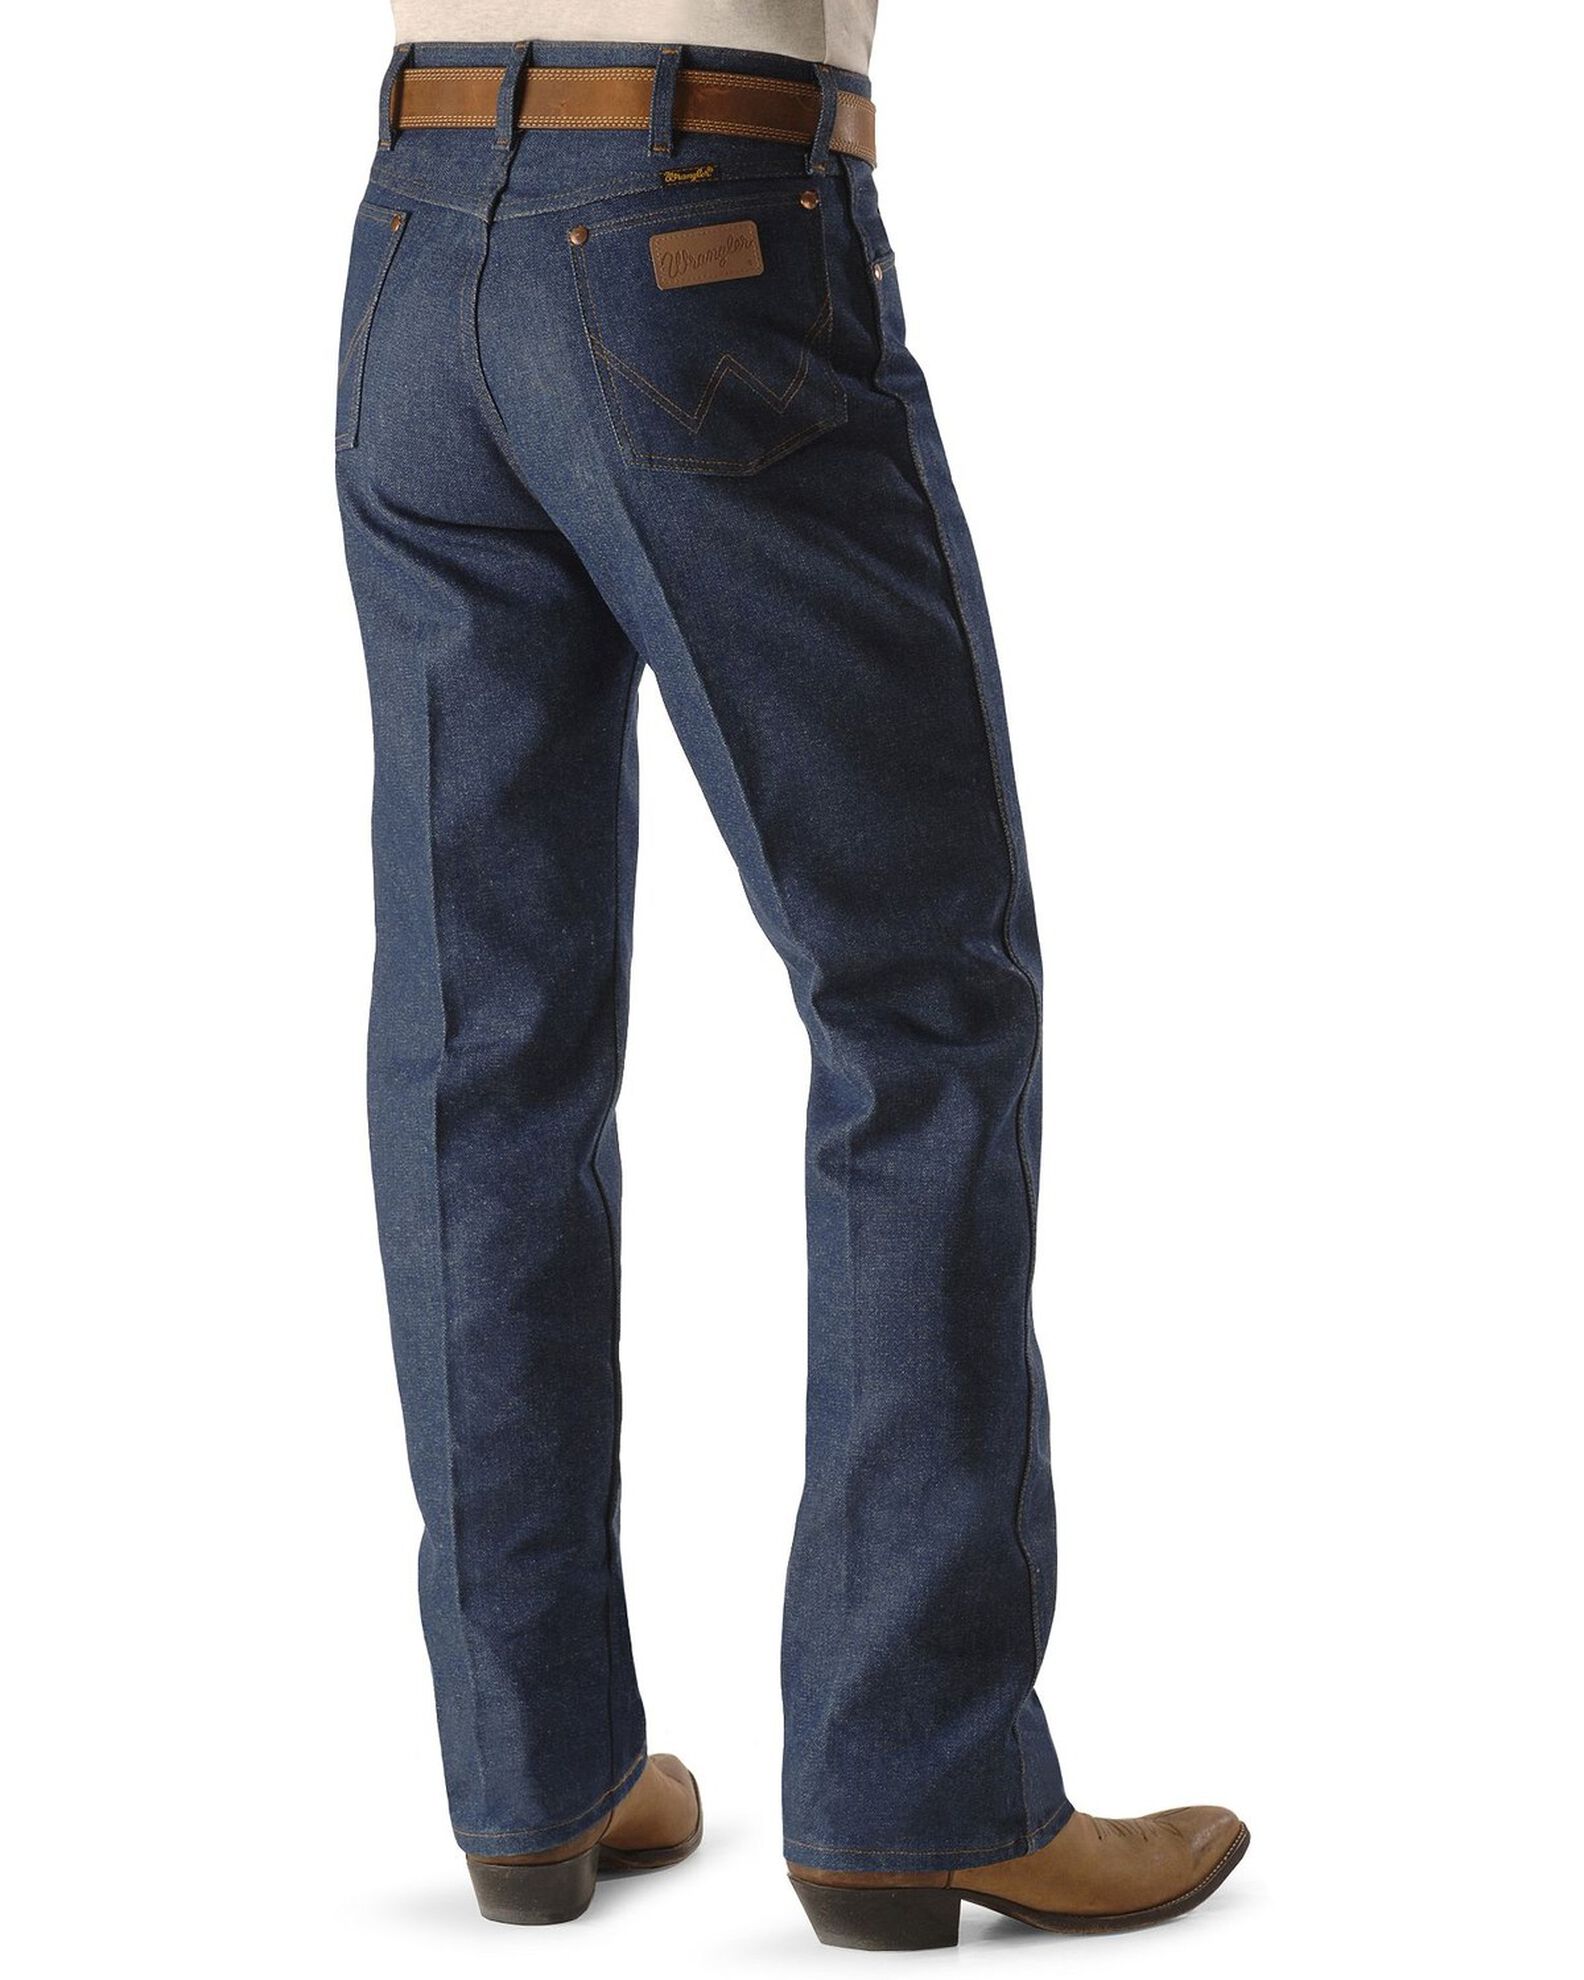 Wrangler Men's Original Fit Rigid Jeans | Boot Barn